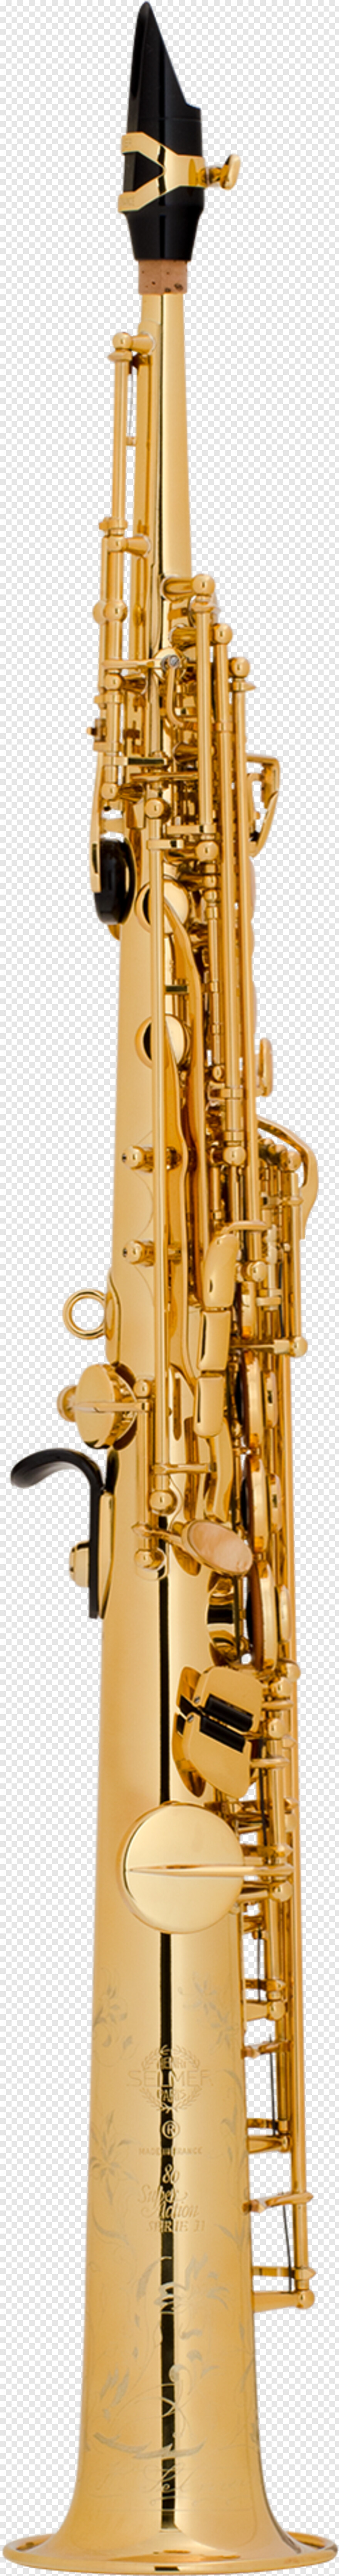 saxophone # 1007508